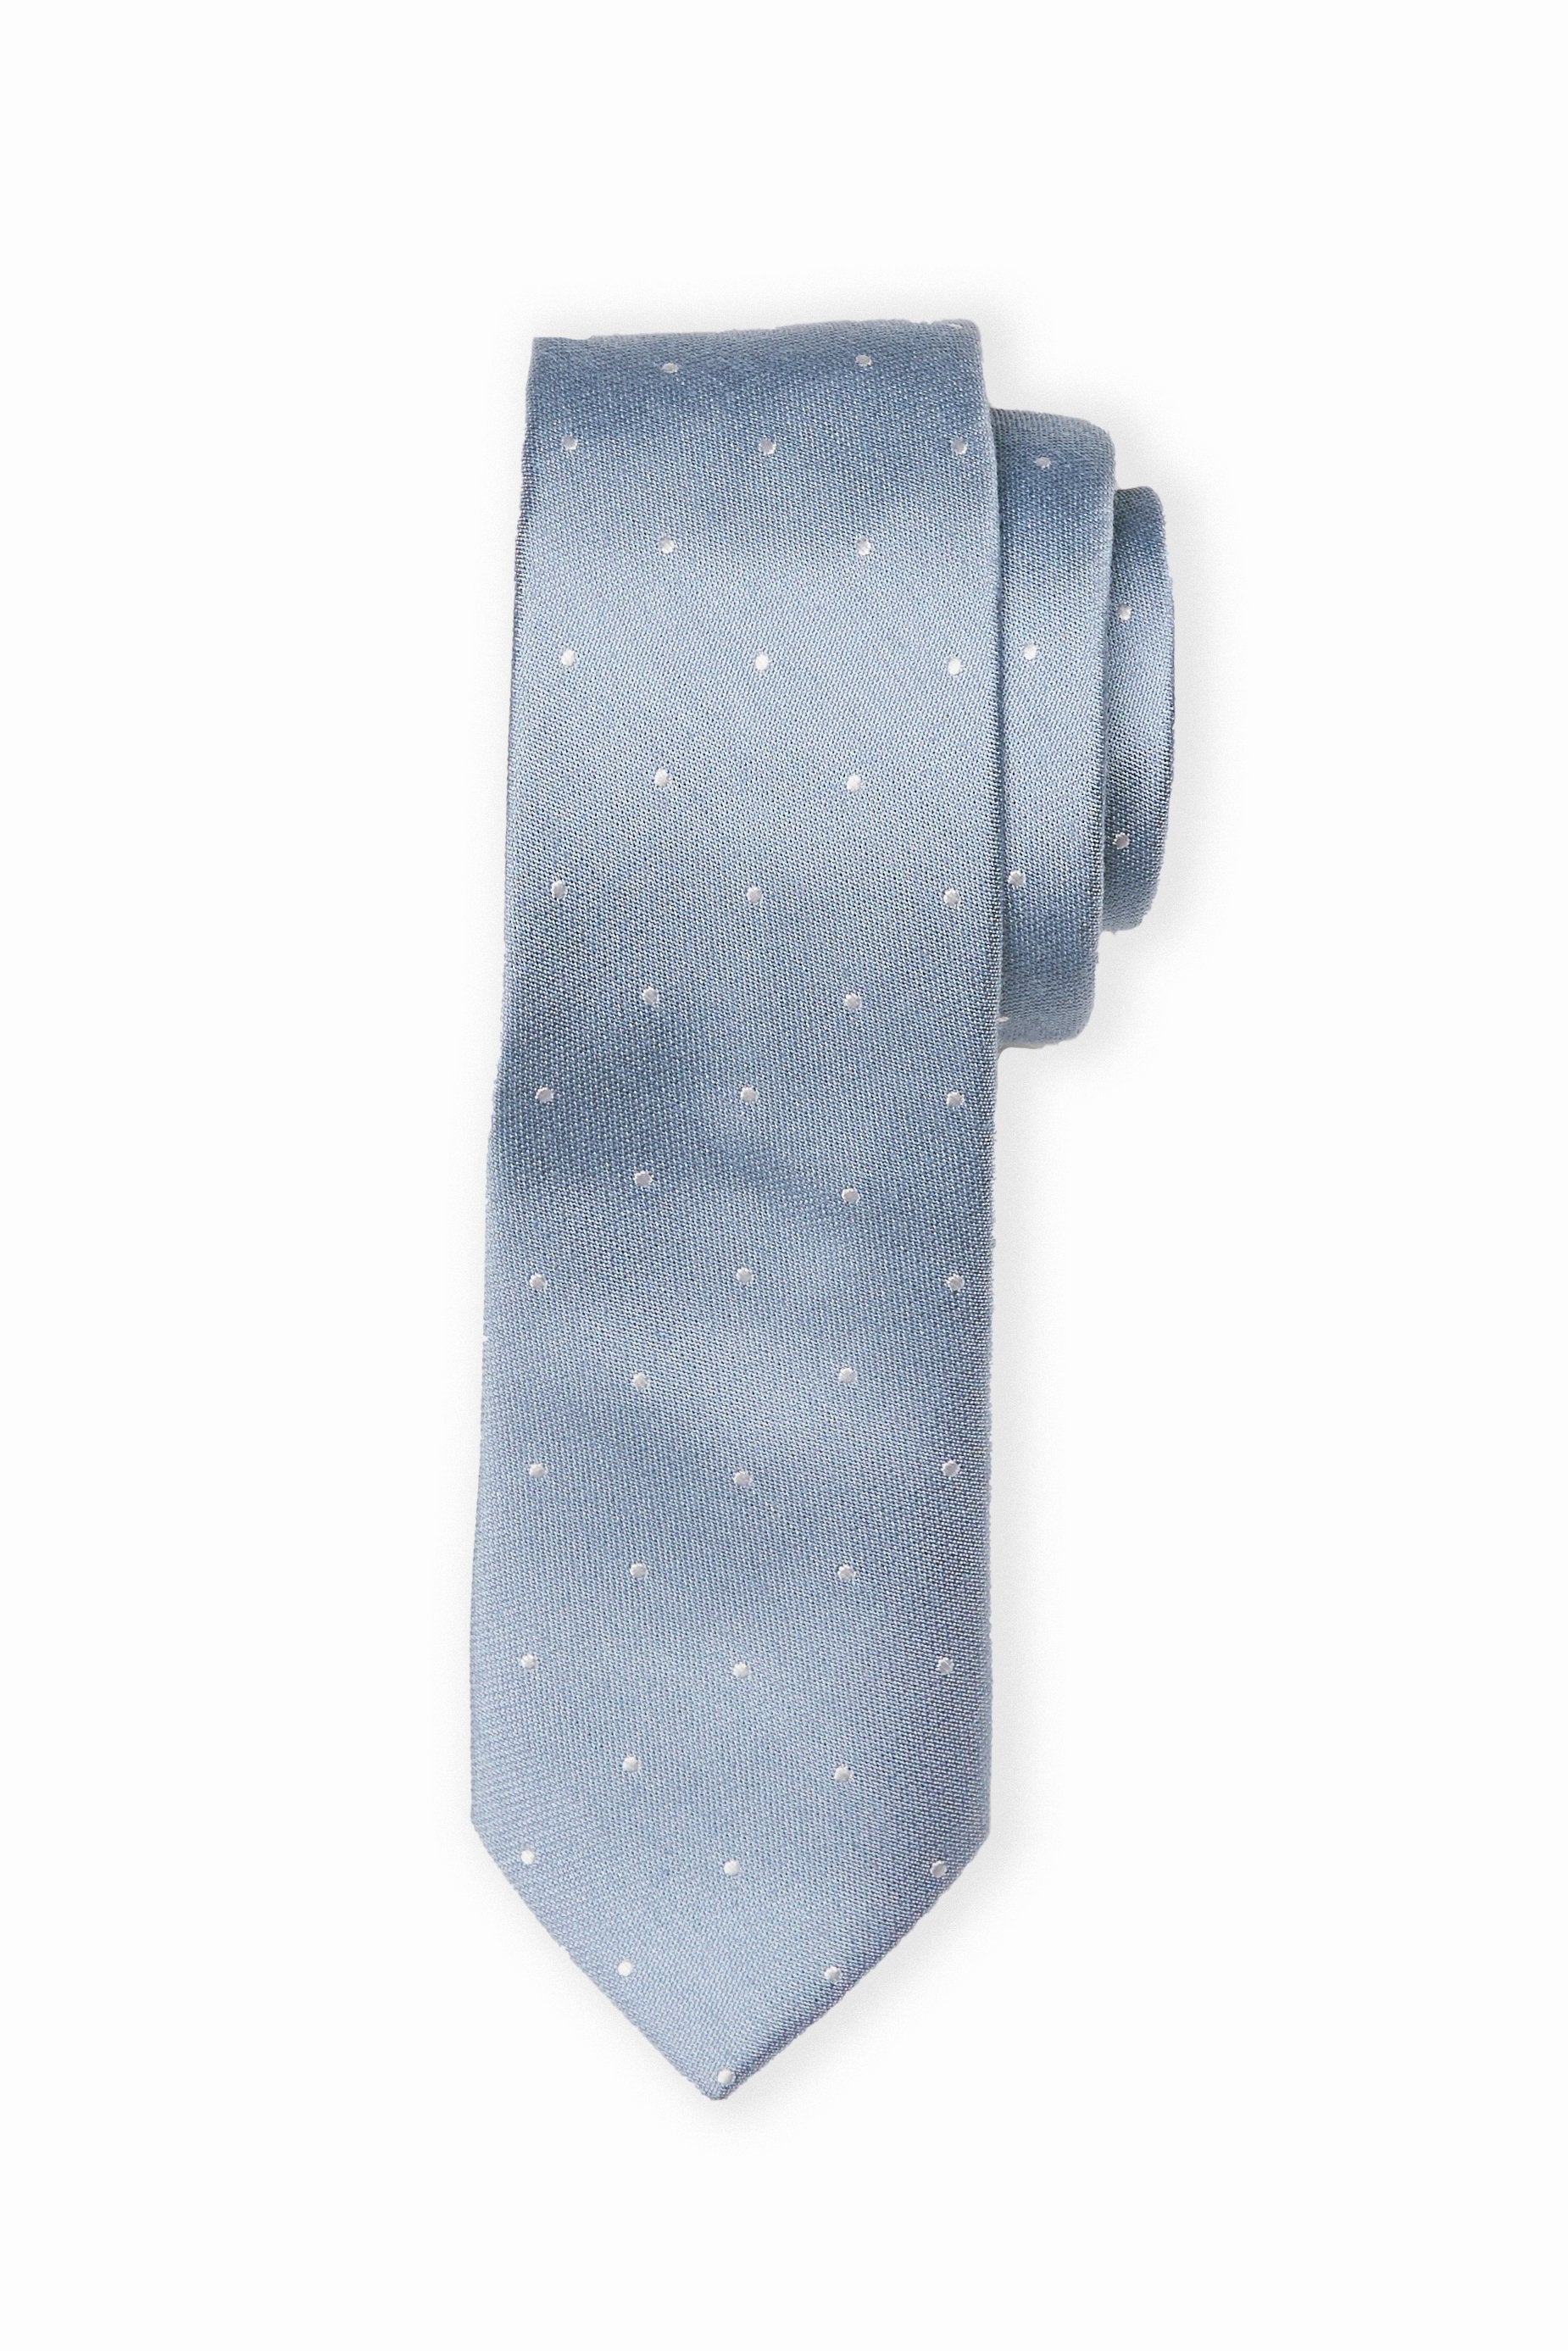 Simon  Dusty Blue Dot Necktie